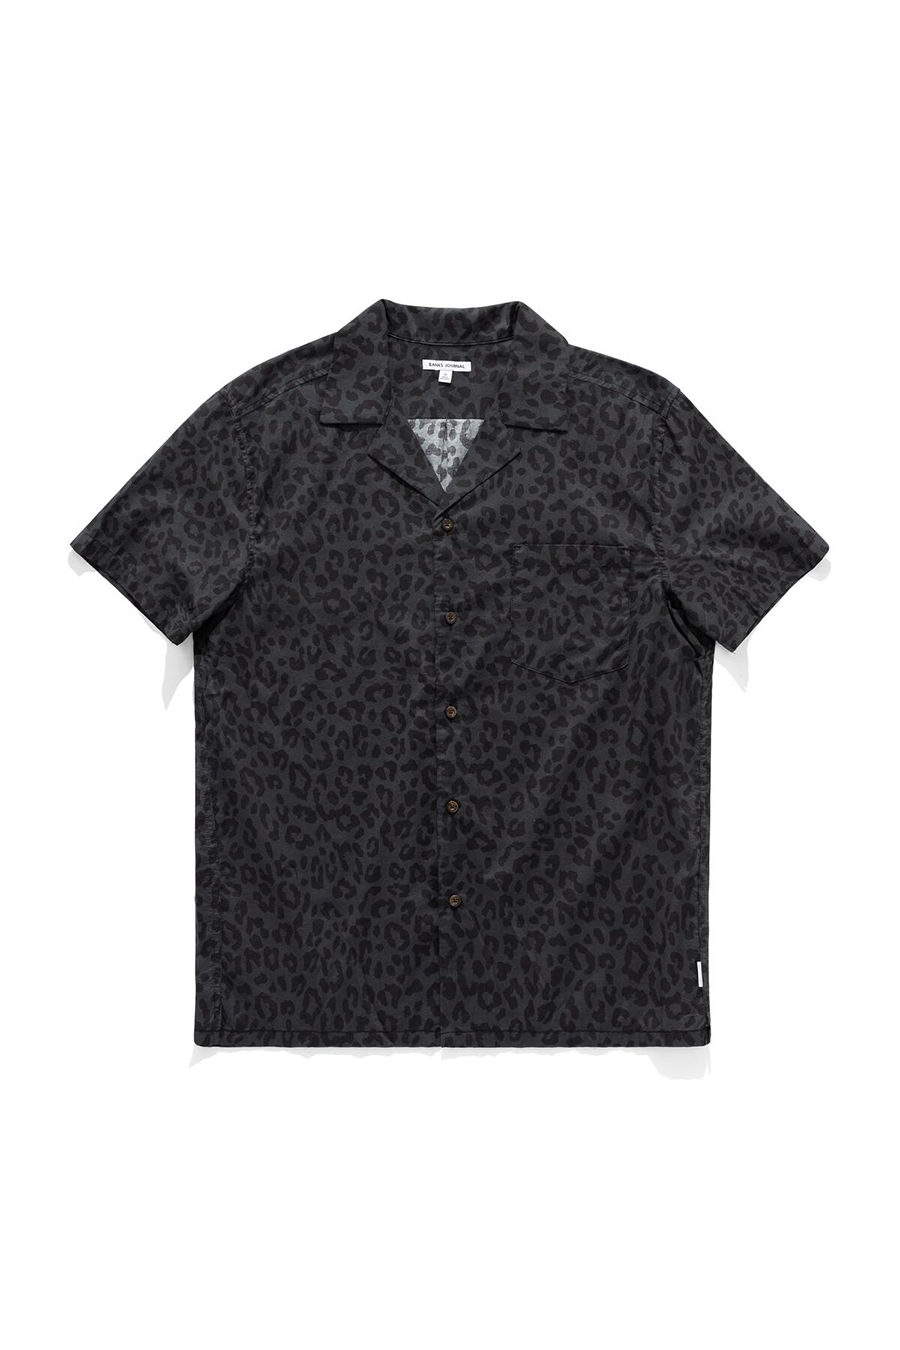 Wilder Shirt | Black - Main Image Number 1 of 1